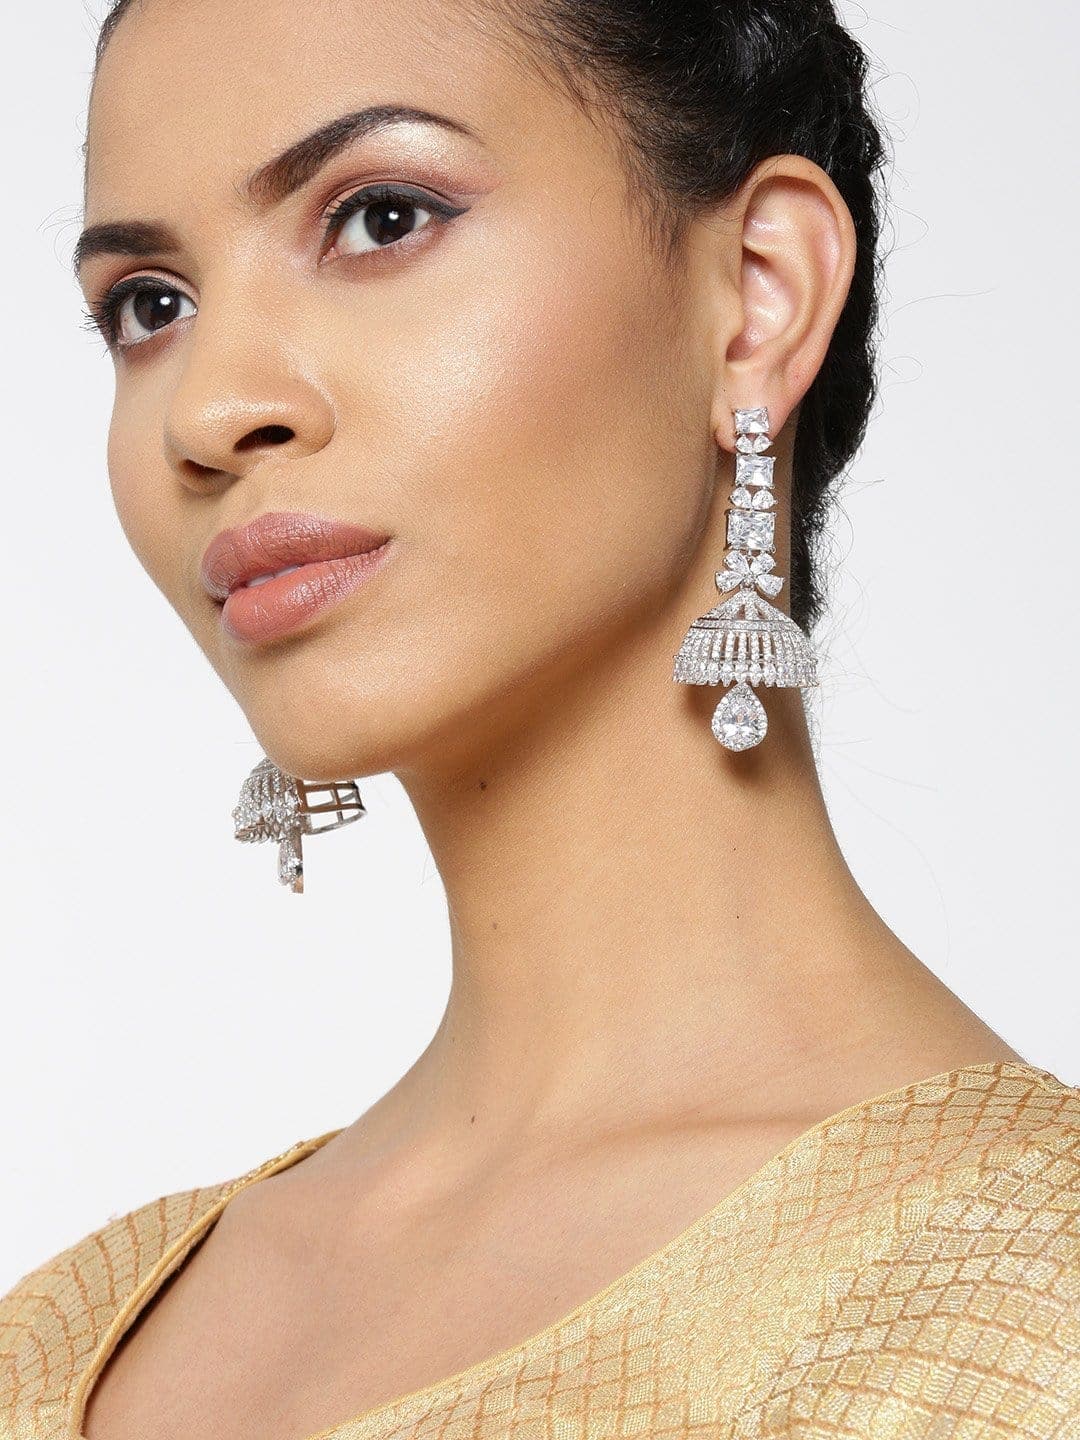 Lovely long ethnic earrings | India beauty women, Beautiful girls dresses,  Indian beauty saree